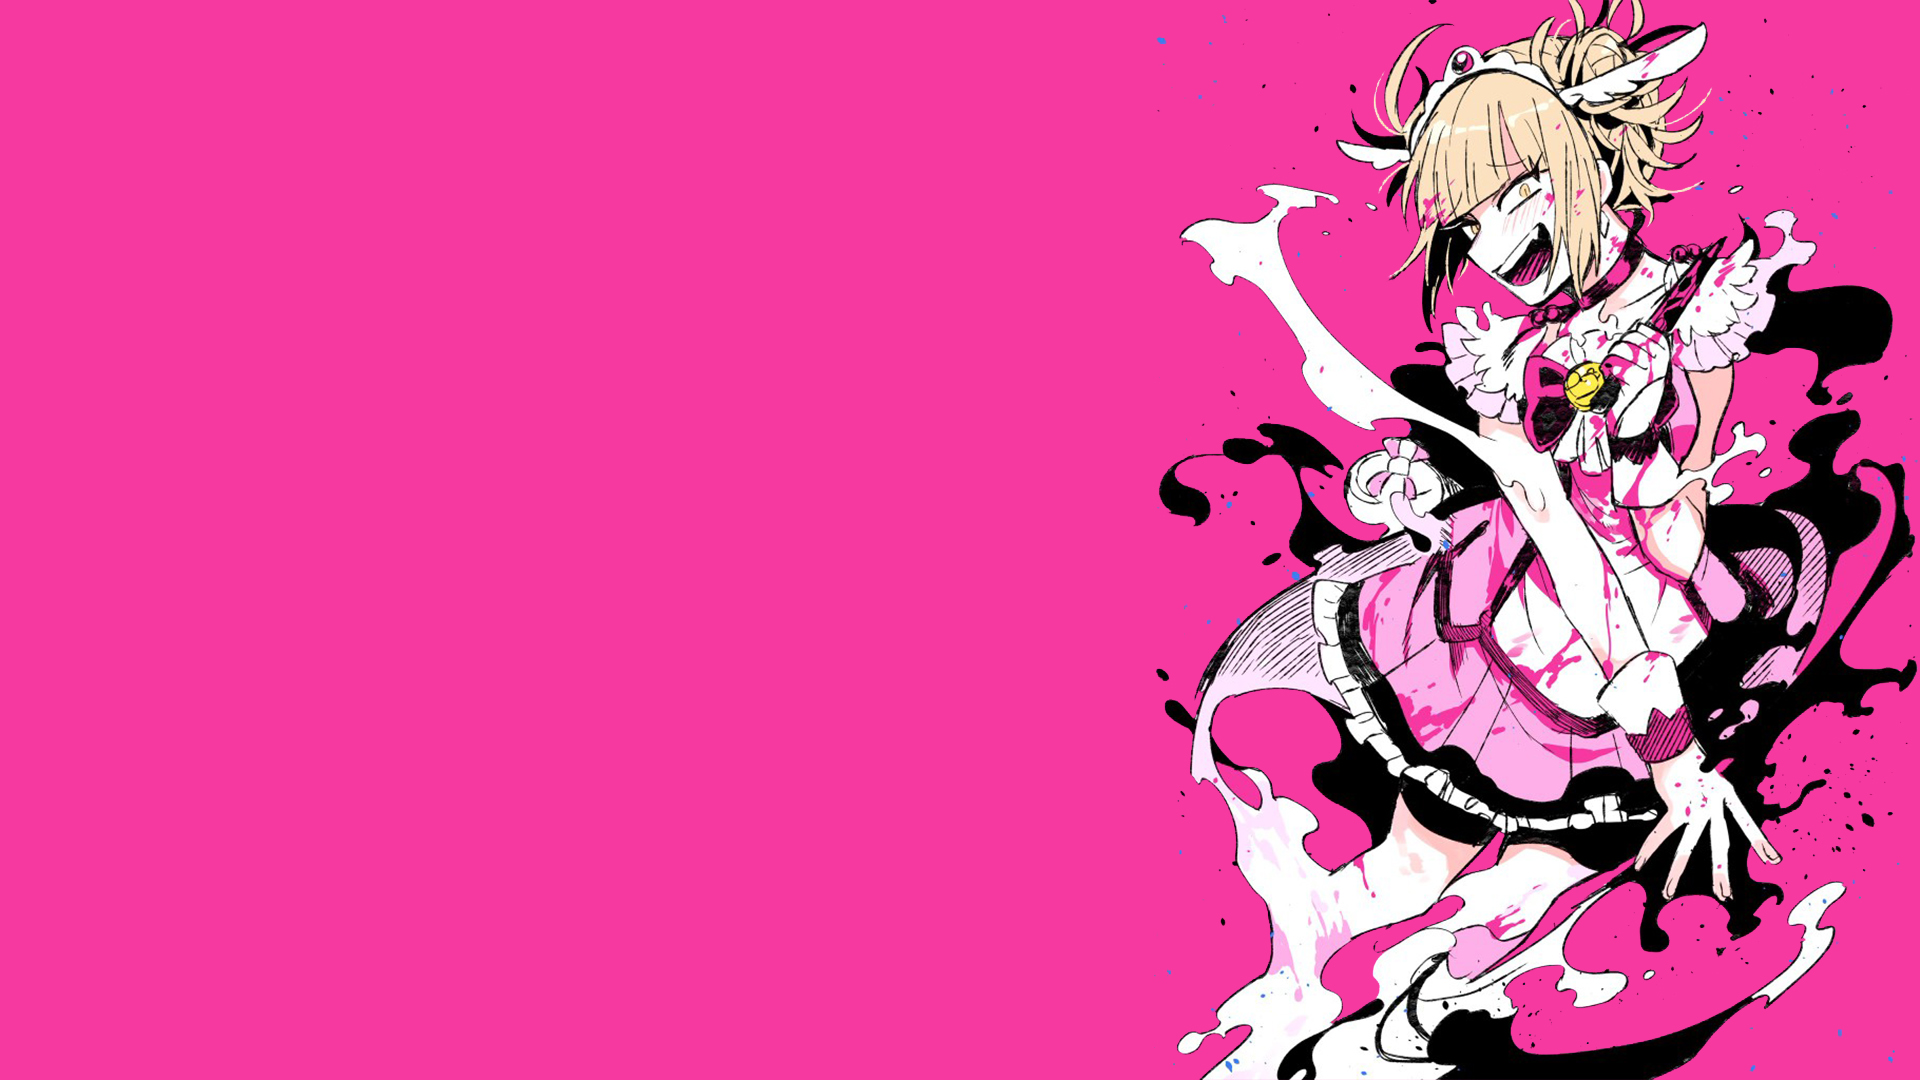 Anime 1920x1080 Boku no Hero Academia Himiko Toga pink background wacky dress anime girls anime open mouth blonde